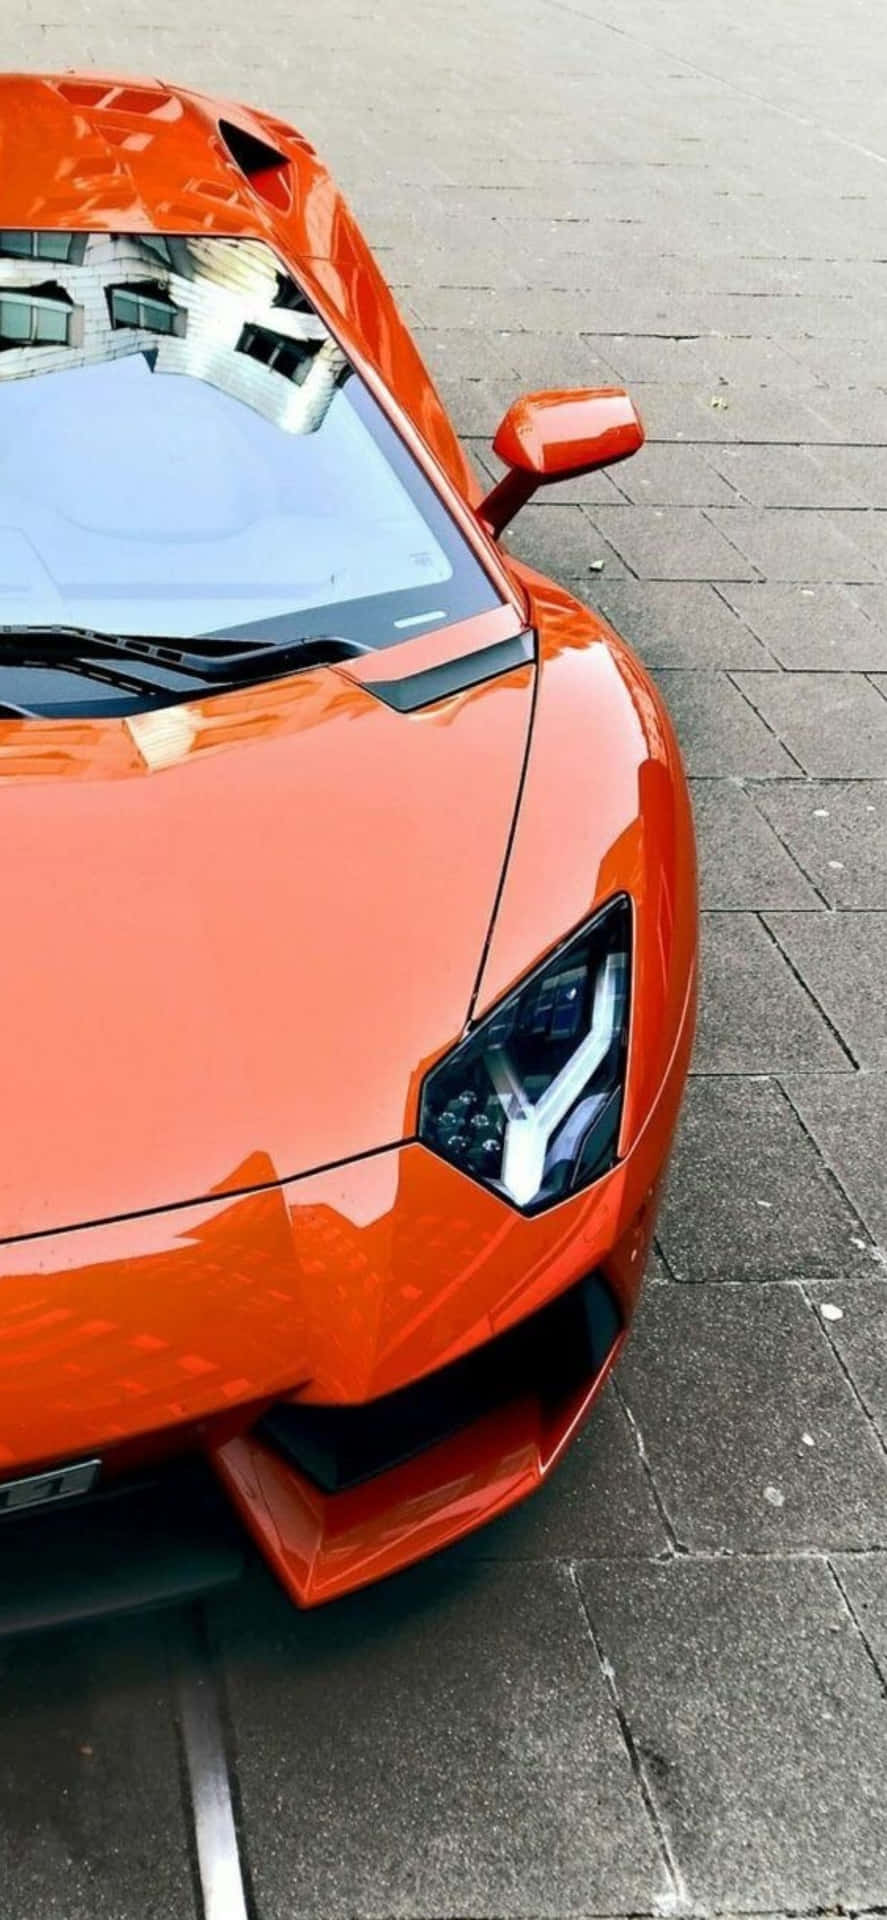 Iphonexs Max Bakgrund Med Lamborghini Orange Aventador.